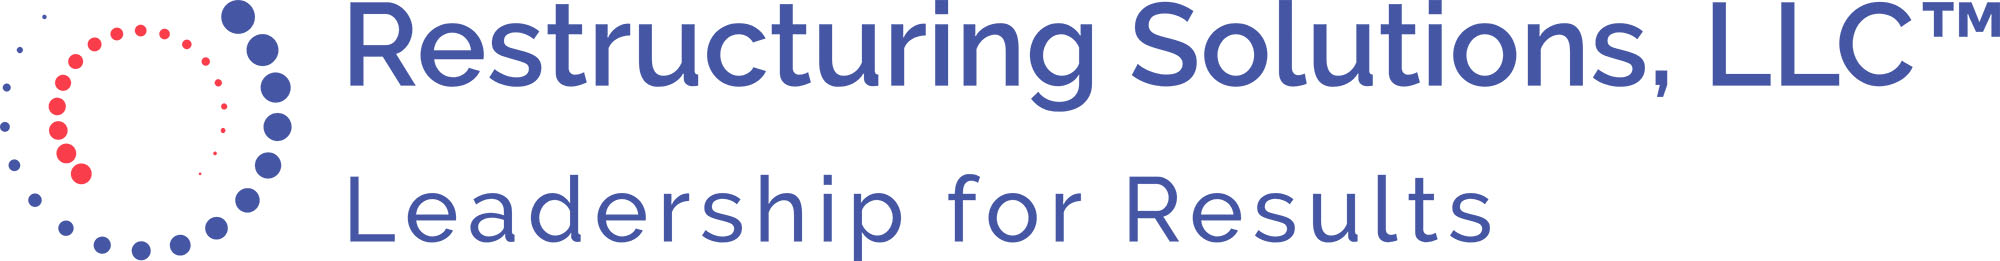 Restructuring Solutions, LLC logo